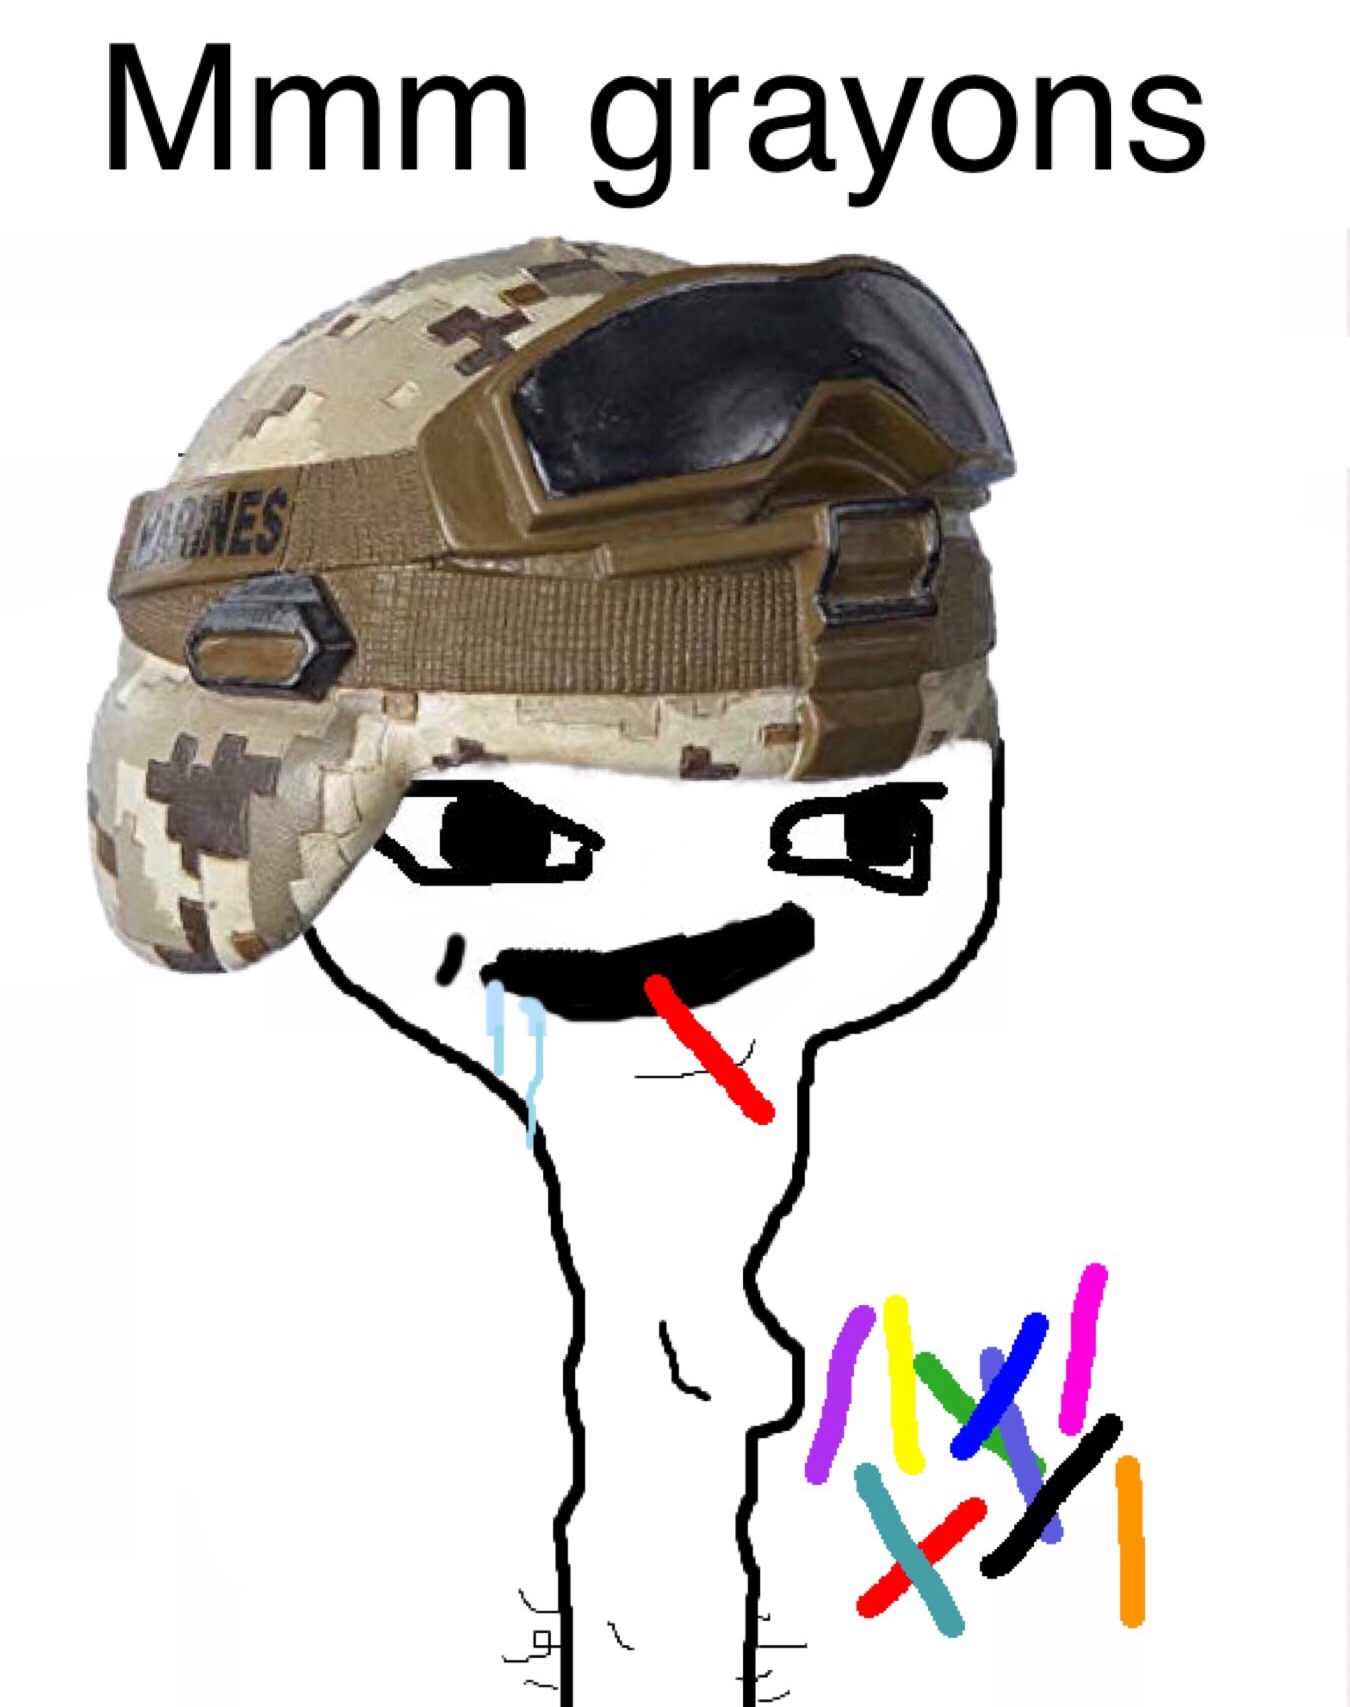 mmmm grayons meme with a military helmet on.